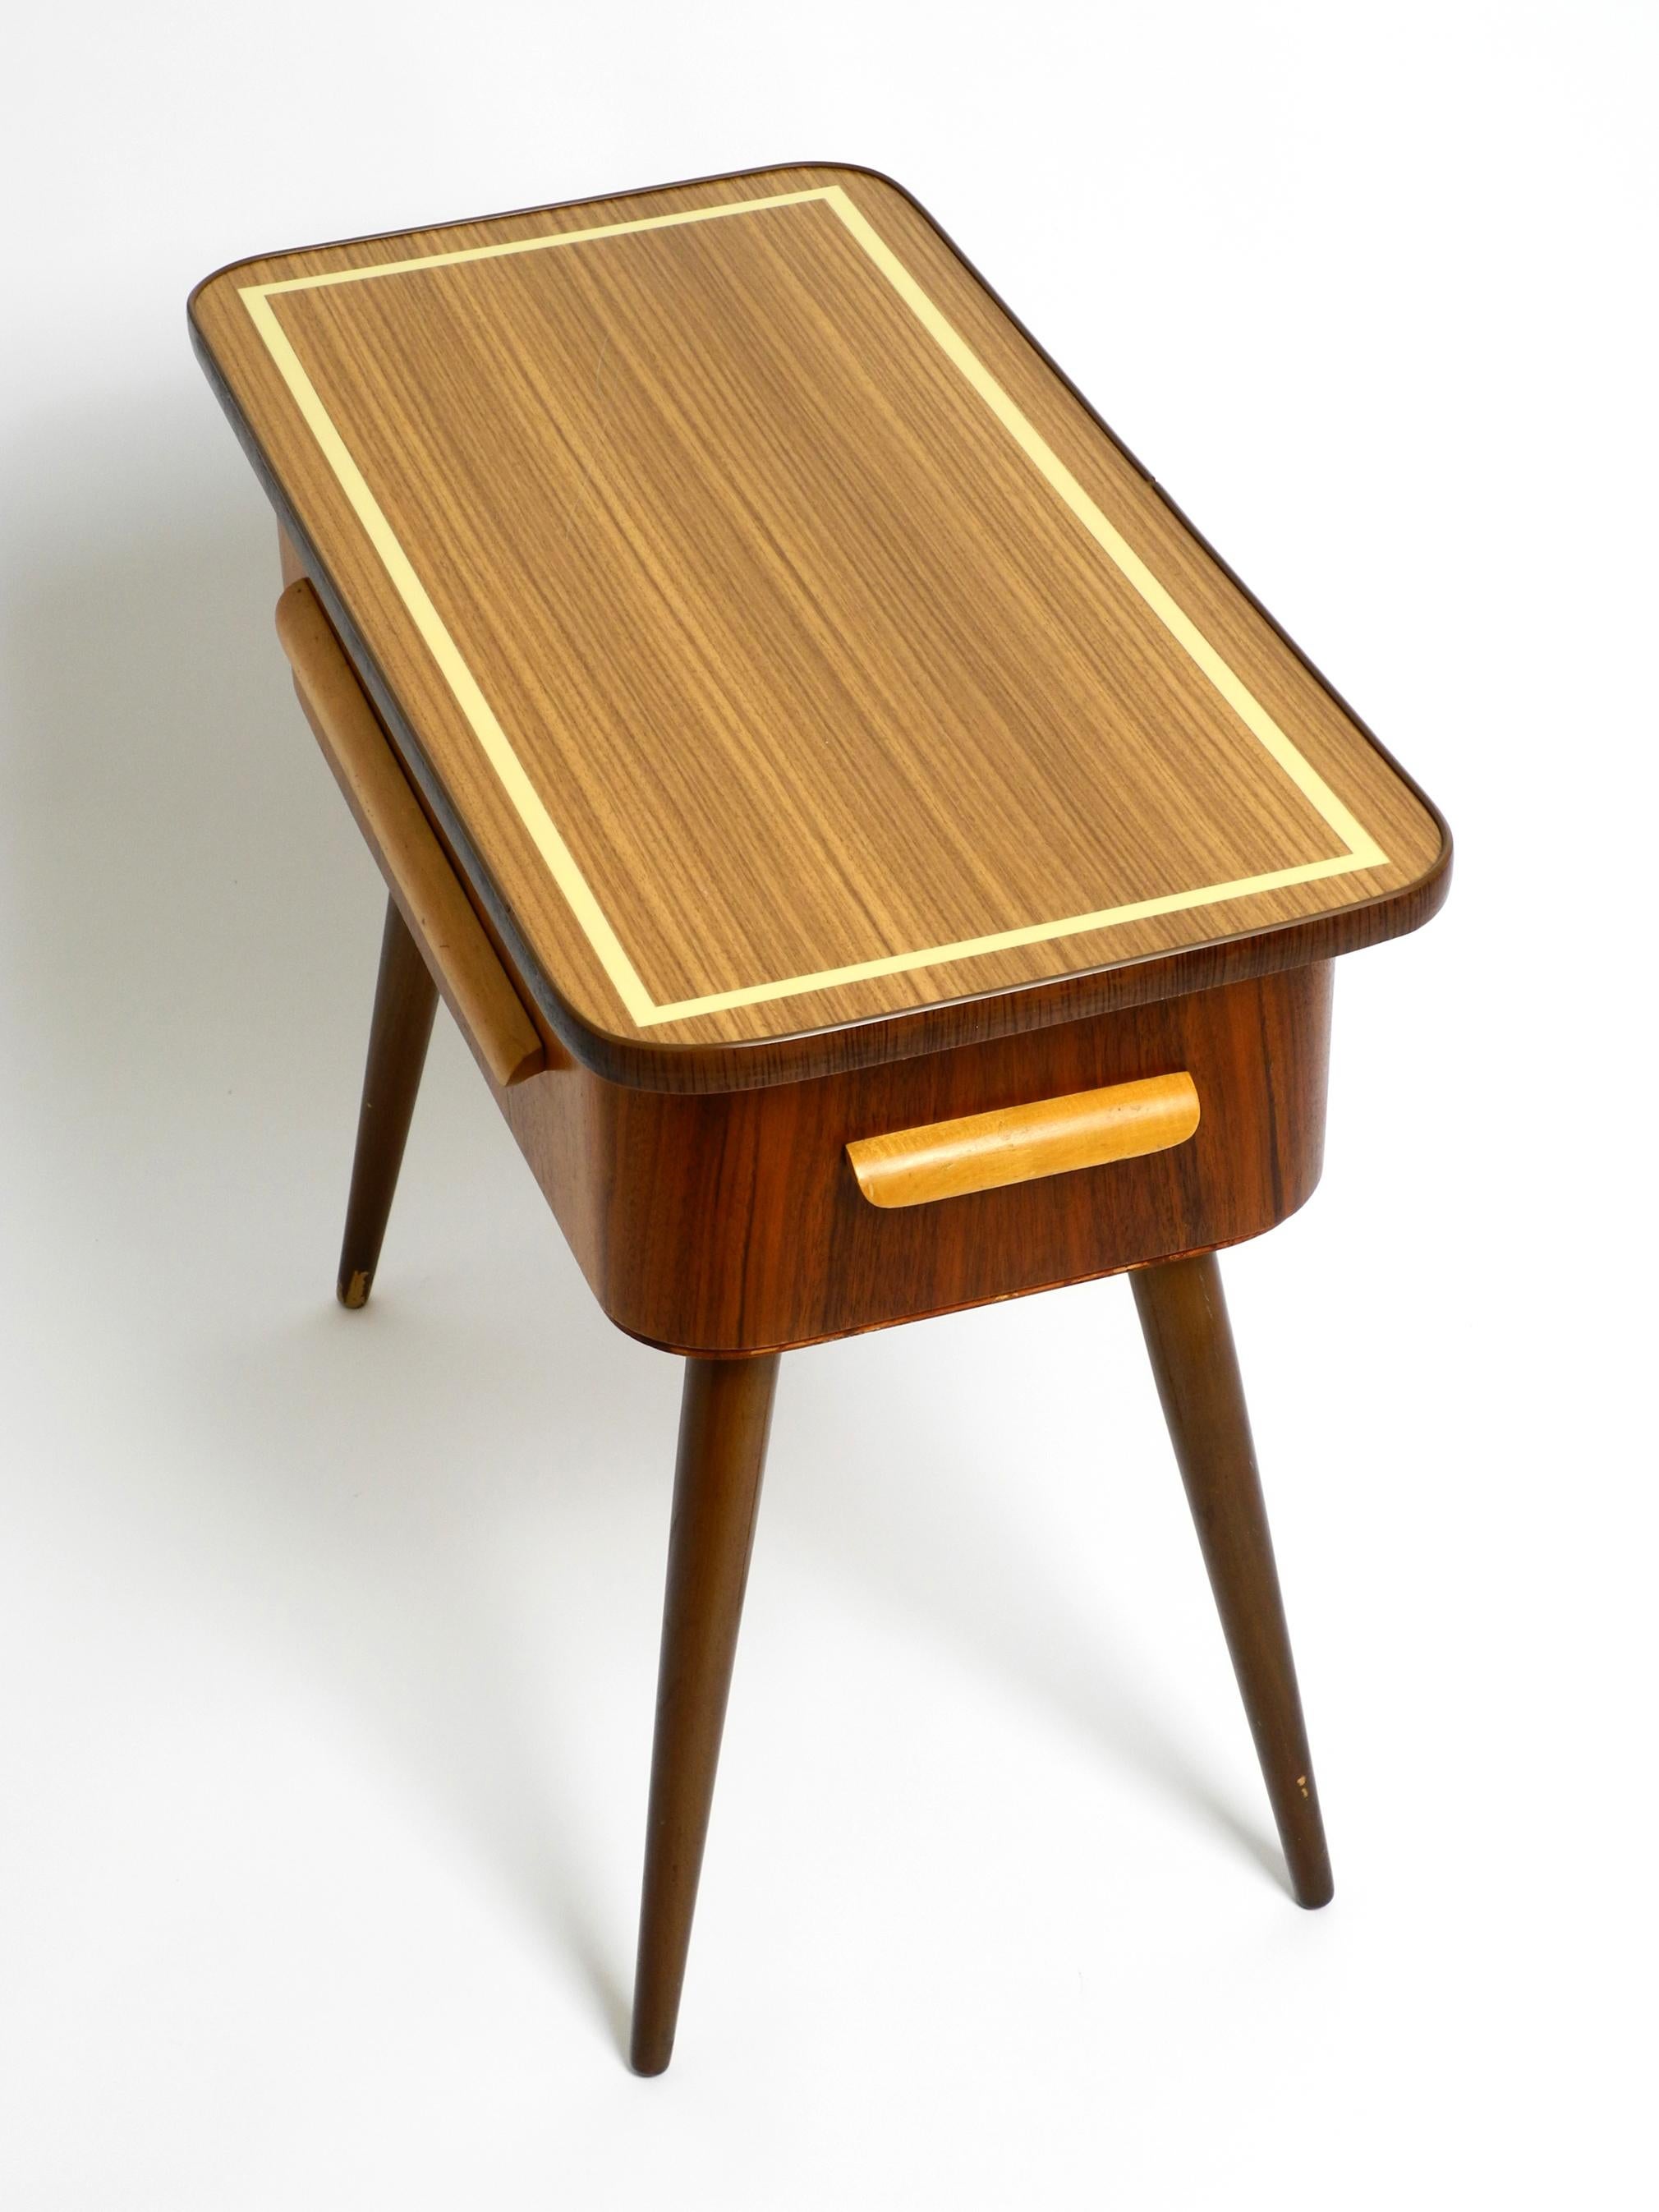 European Beautiful Original 1950s Sewing Box with Teak Veneer with Hinged Table Top For Sale